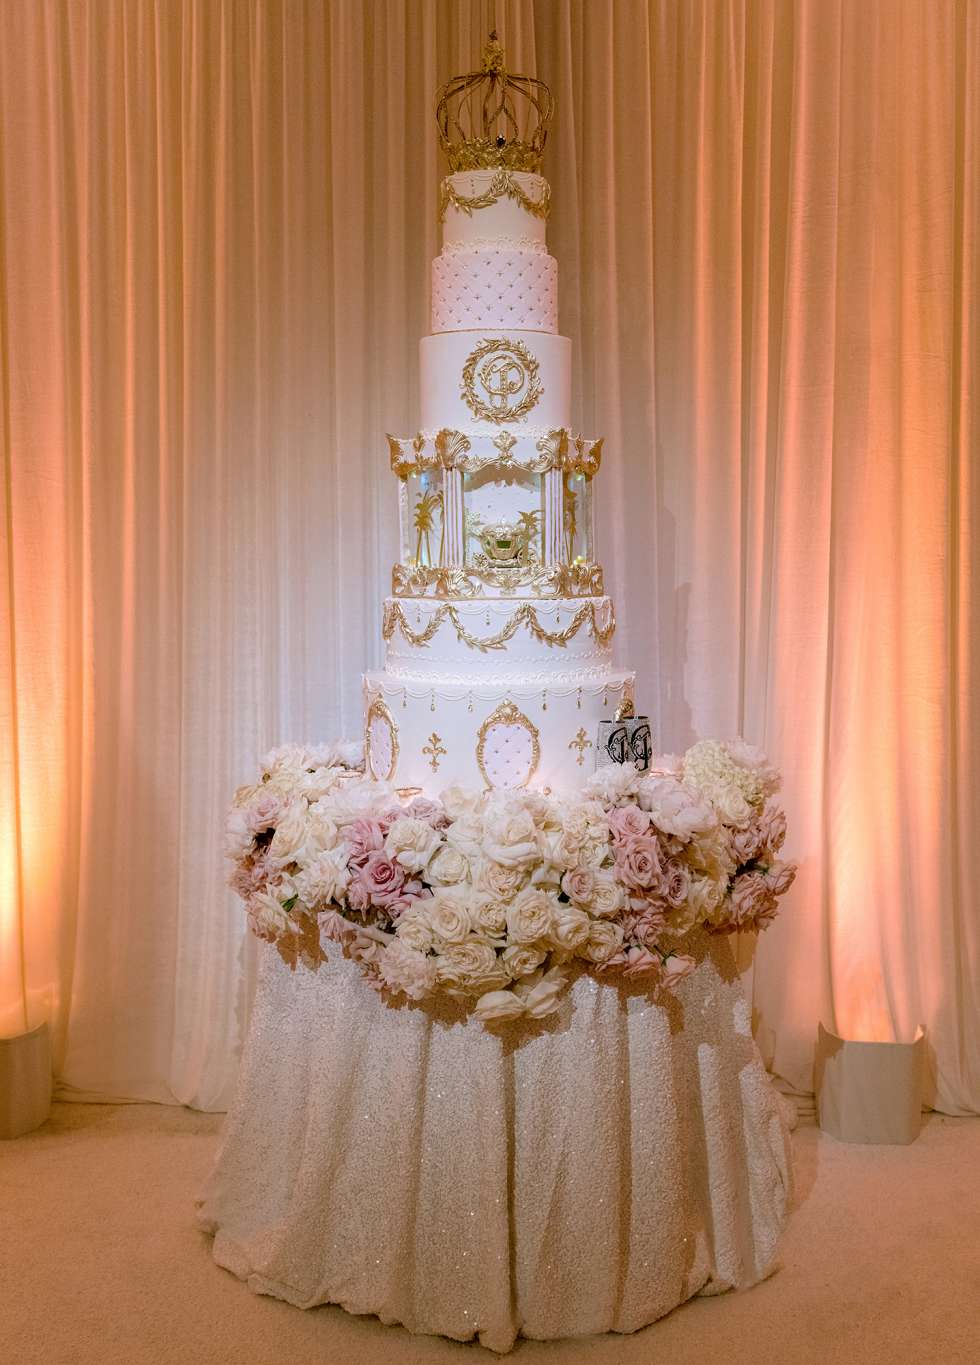 Paris Hilton's Wedding Cake